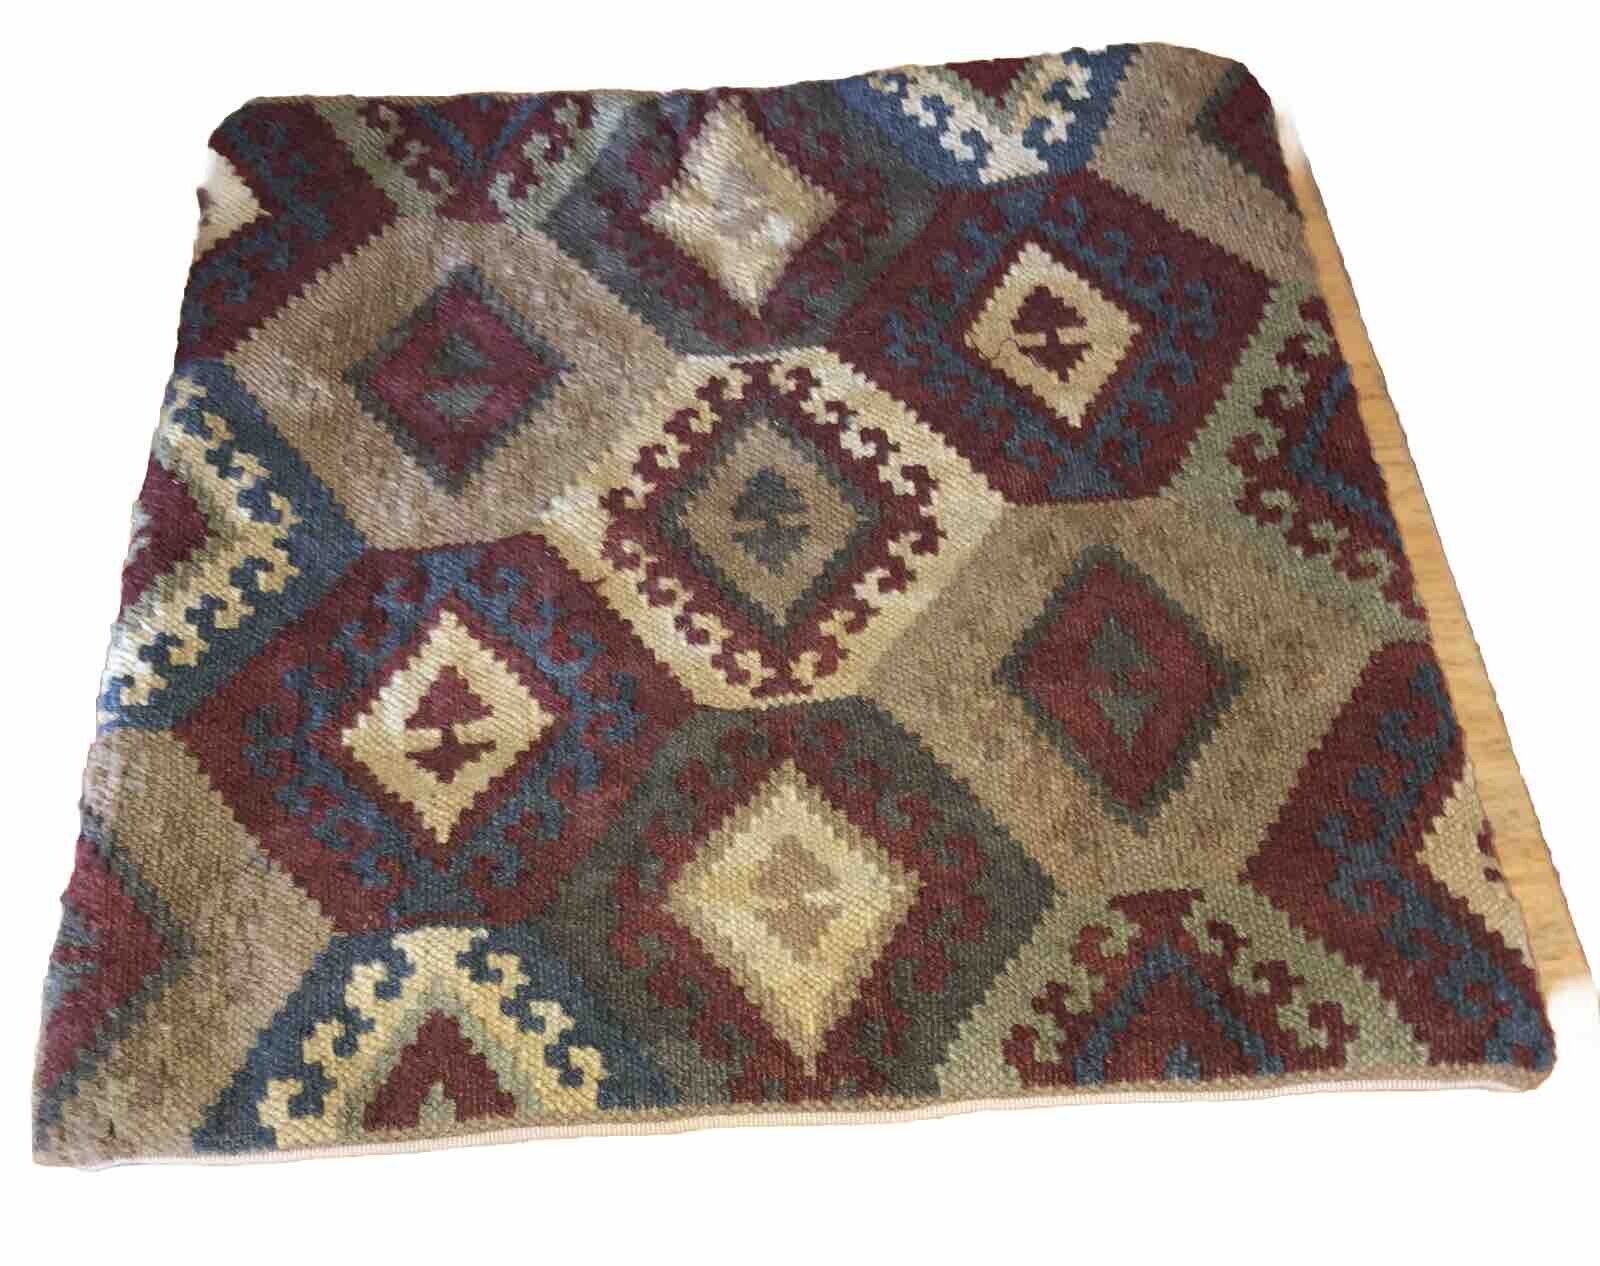 VTG Pottery Barn Kilim Wool/Cotton Multicolor 18” Square Pillow Cover #2